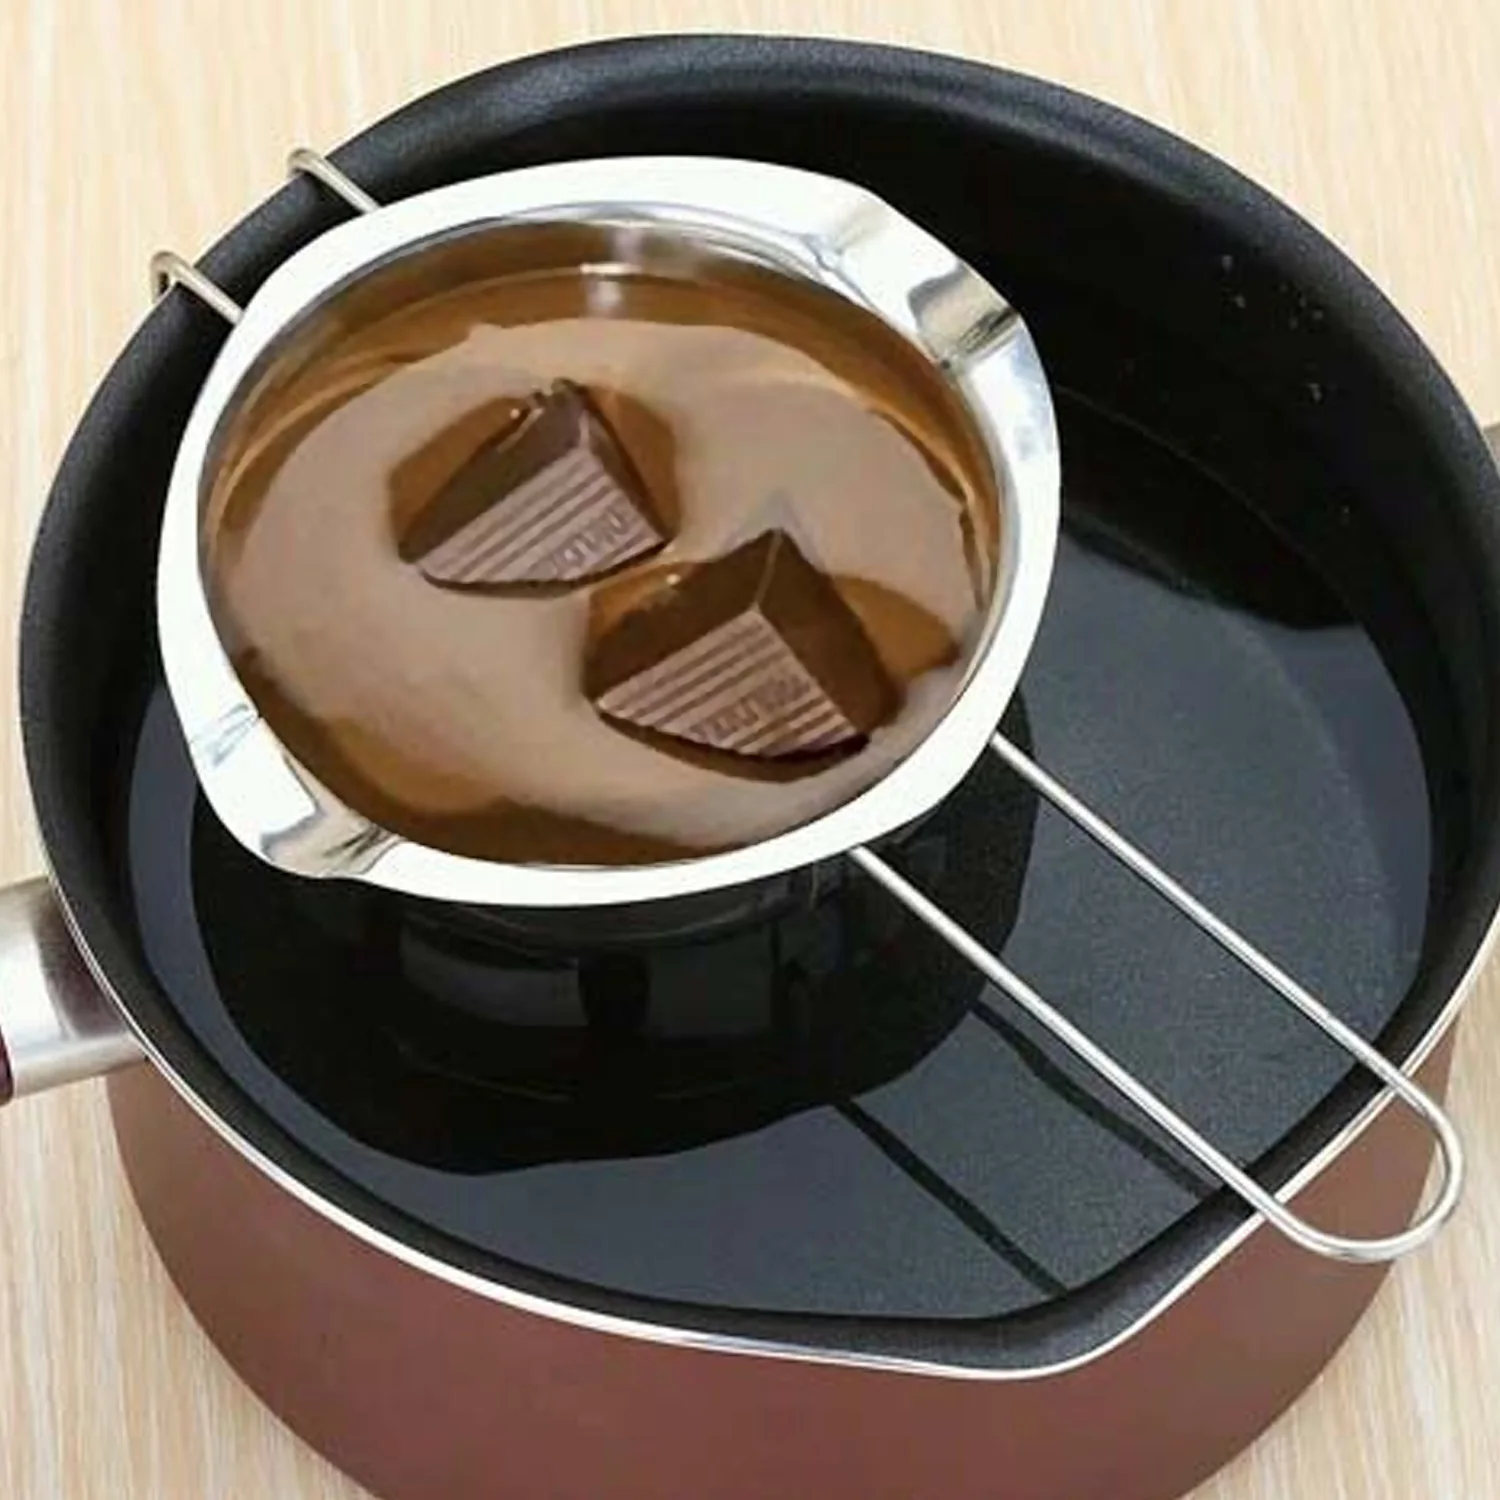 

Behogar Stainless Steel Universal Double Boiler Melting Pot for Milk utter Chocolate Cheese Caramel Baking Cooking Tools